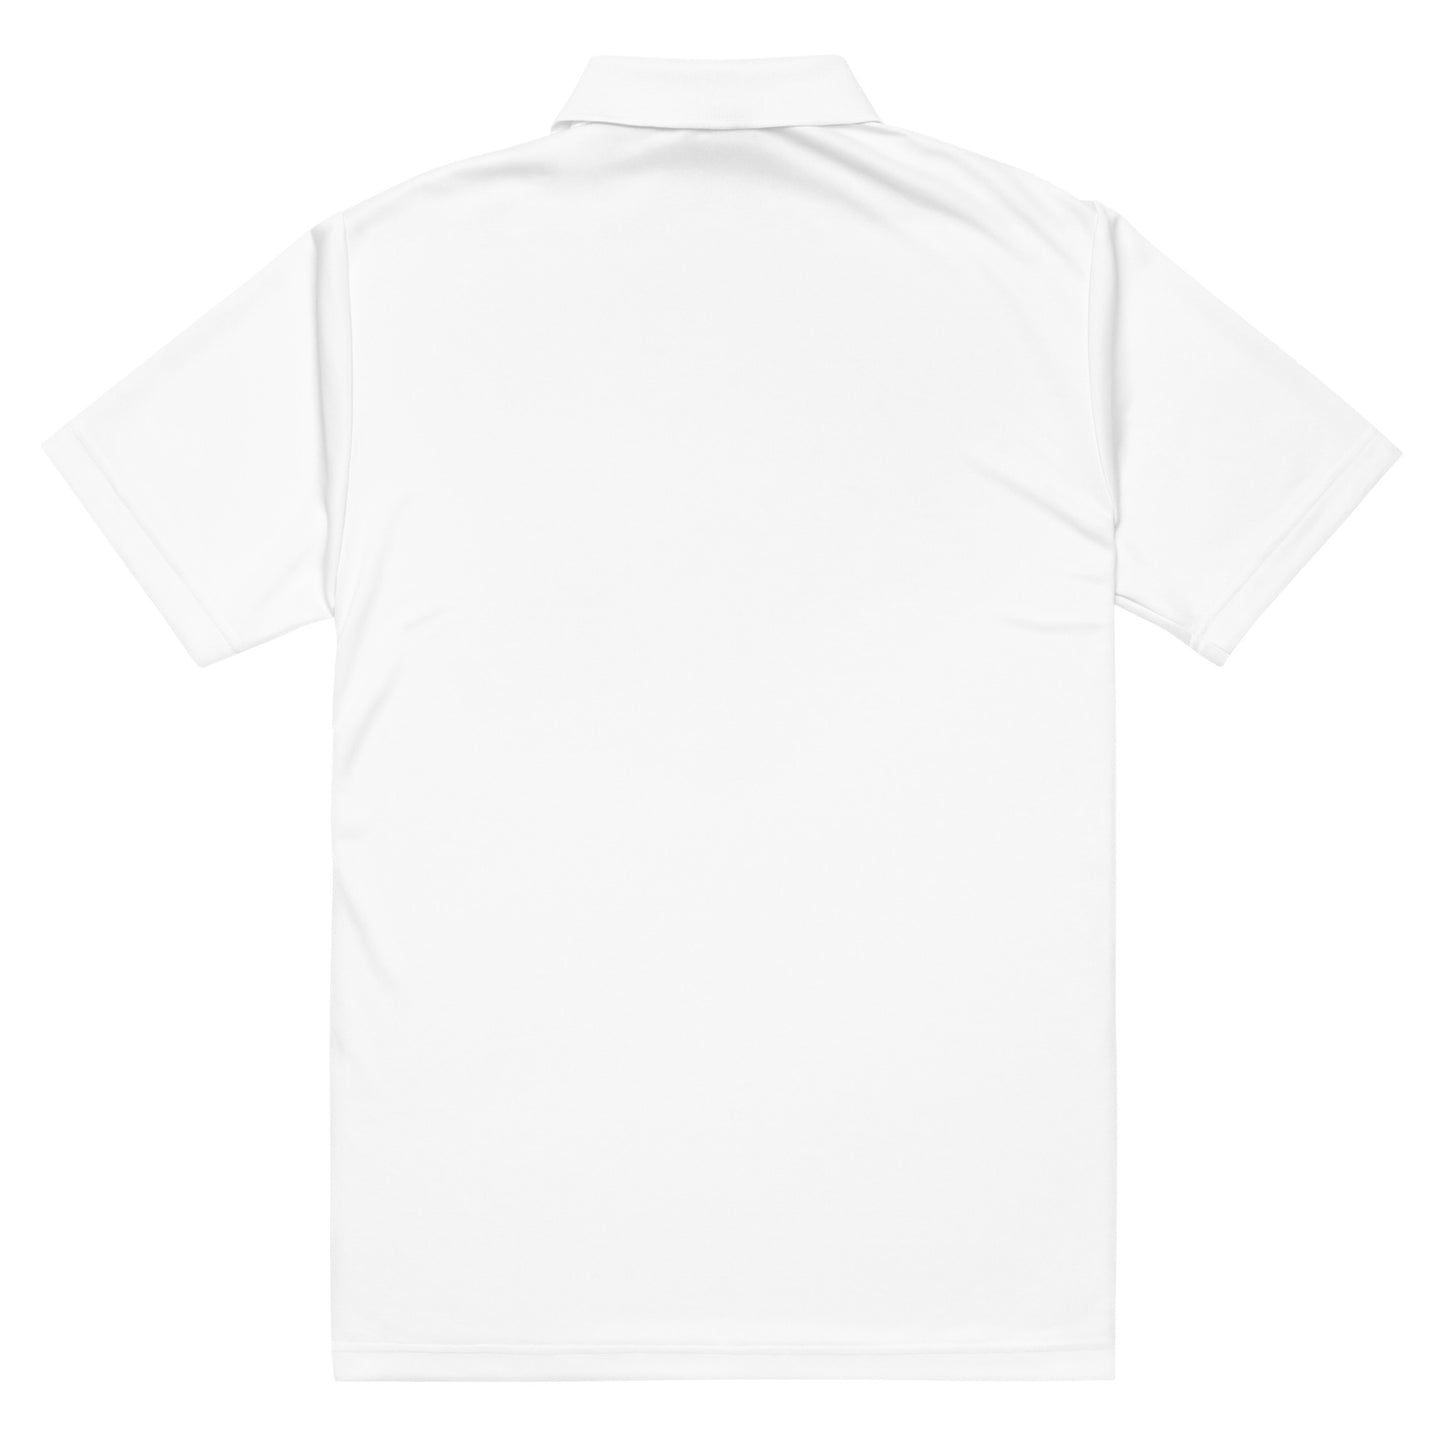 Solihull’s/Adidas Polo Shirt